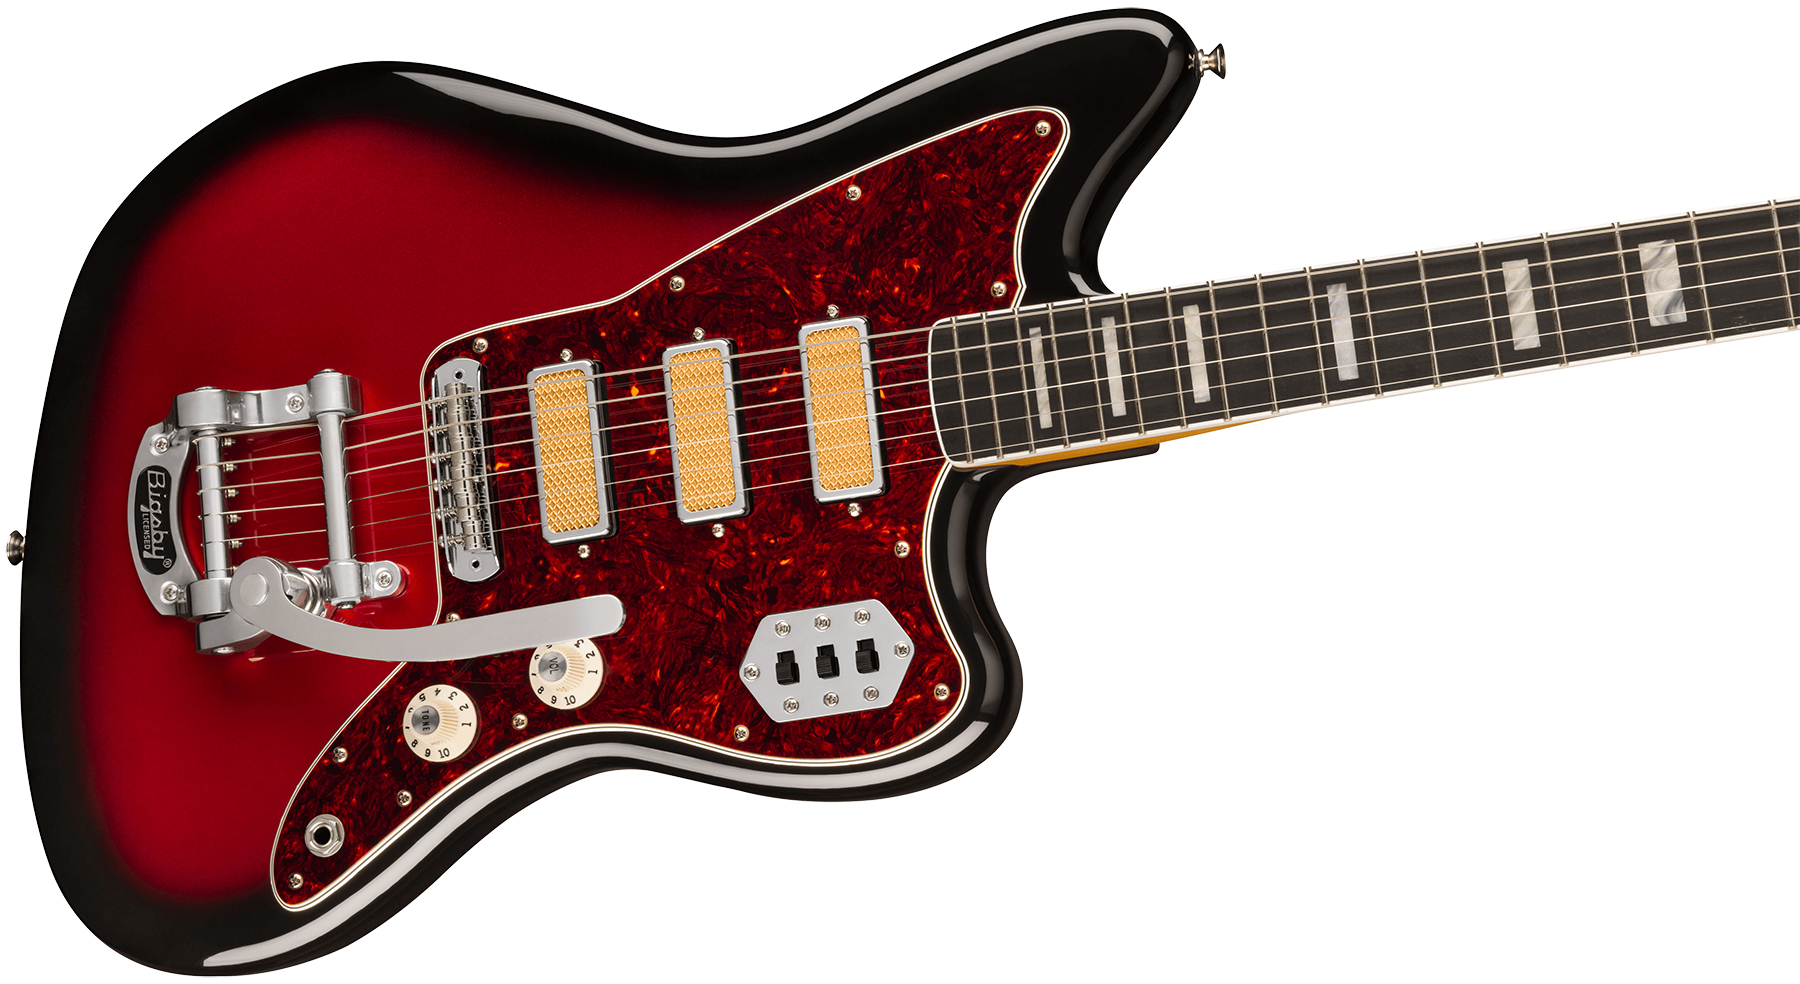 Fender Jazzmaster Gold Foil Ltd Mex 3mh Trem Bigsby Eb - Candy Apple Burst - Guitarra electrica retro rock - Variation 2